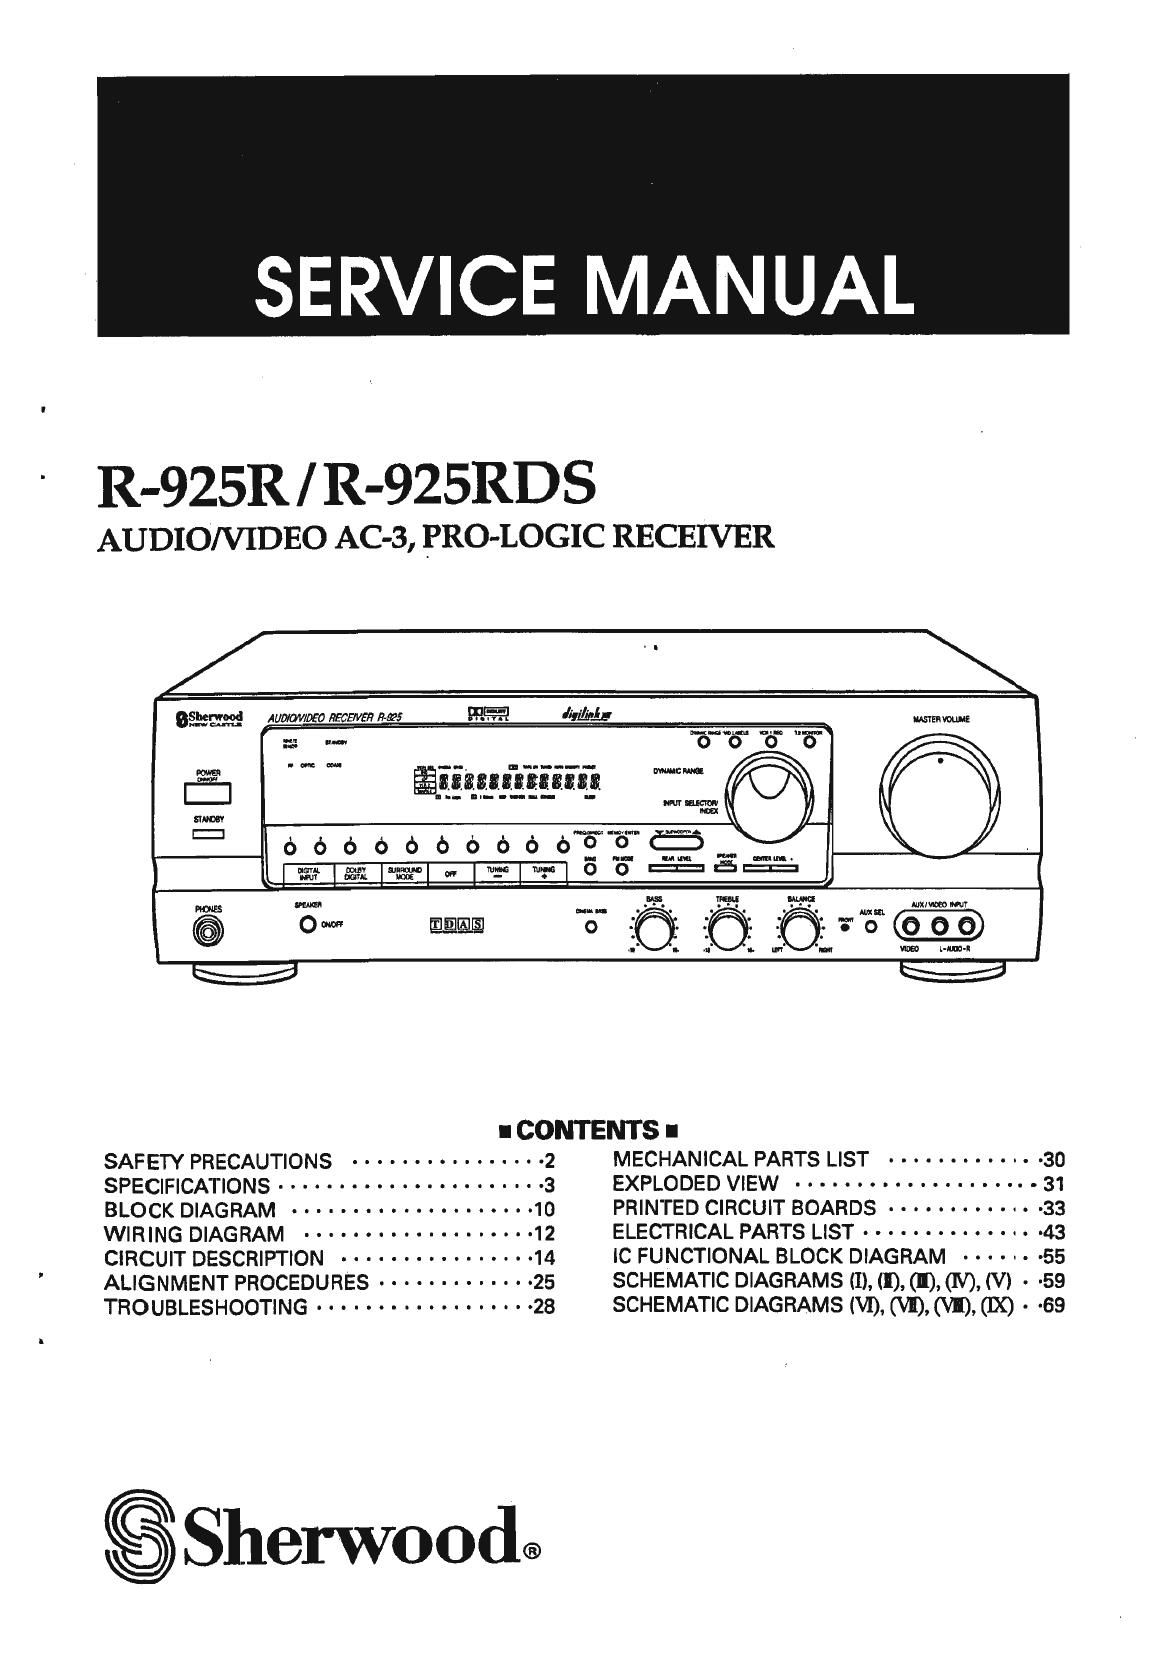 Sherwood R 925R R 925RDS Service Manual